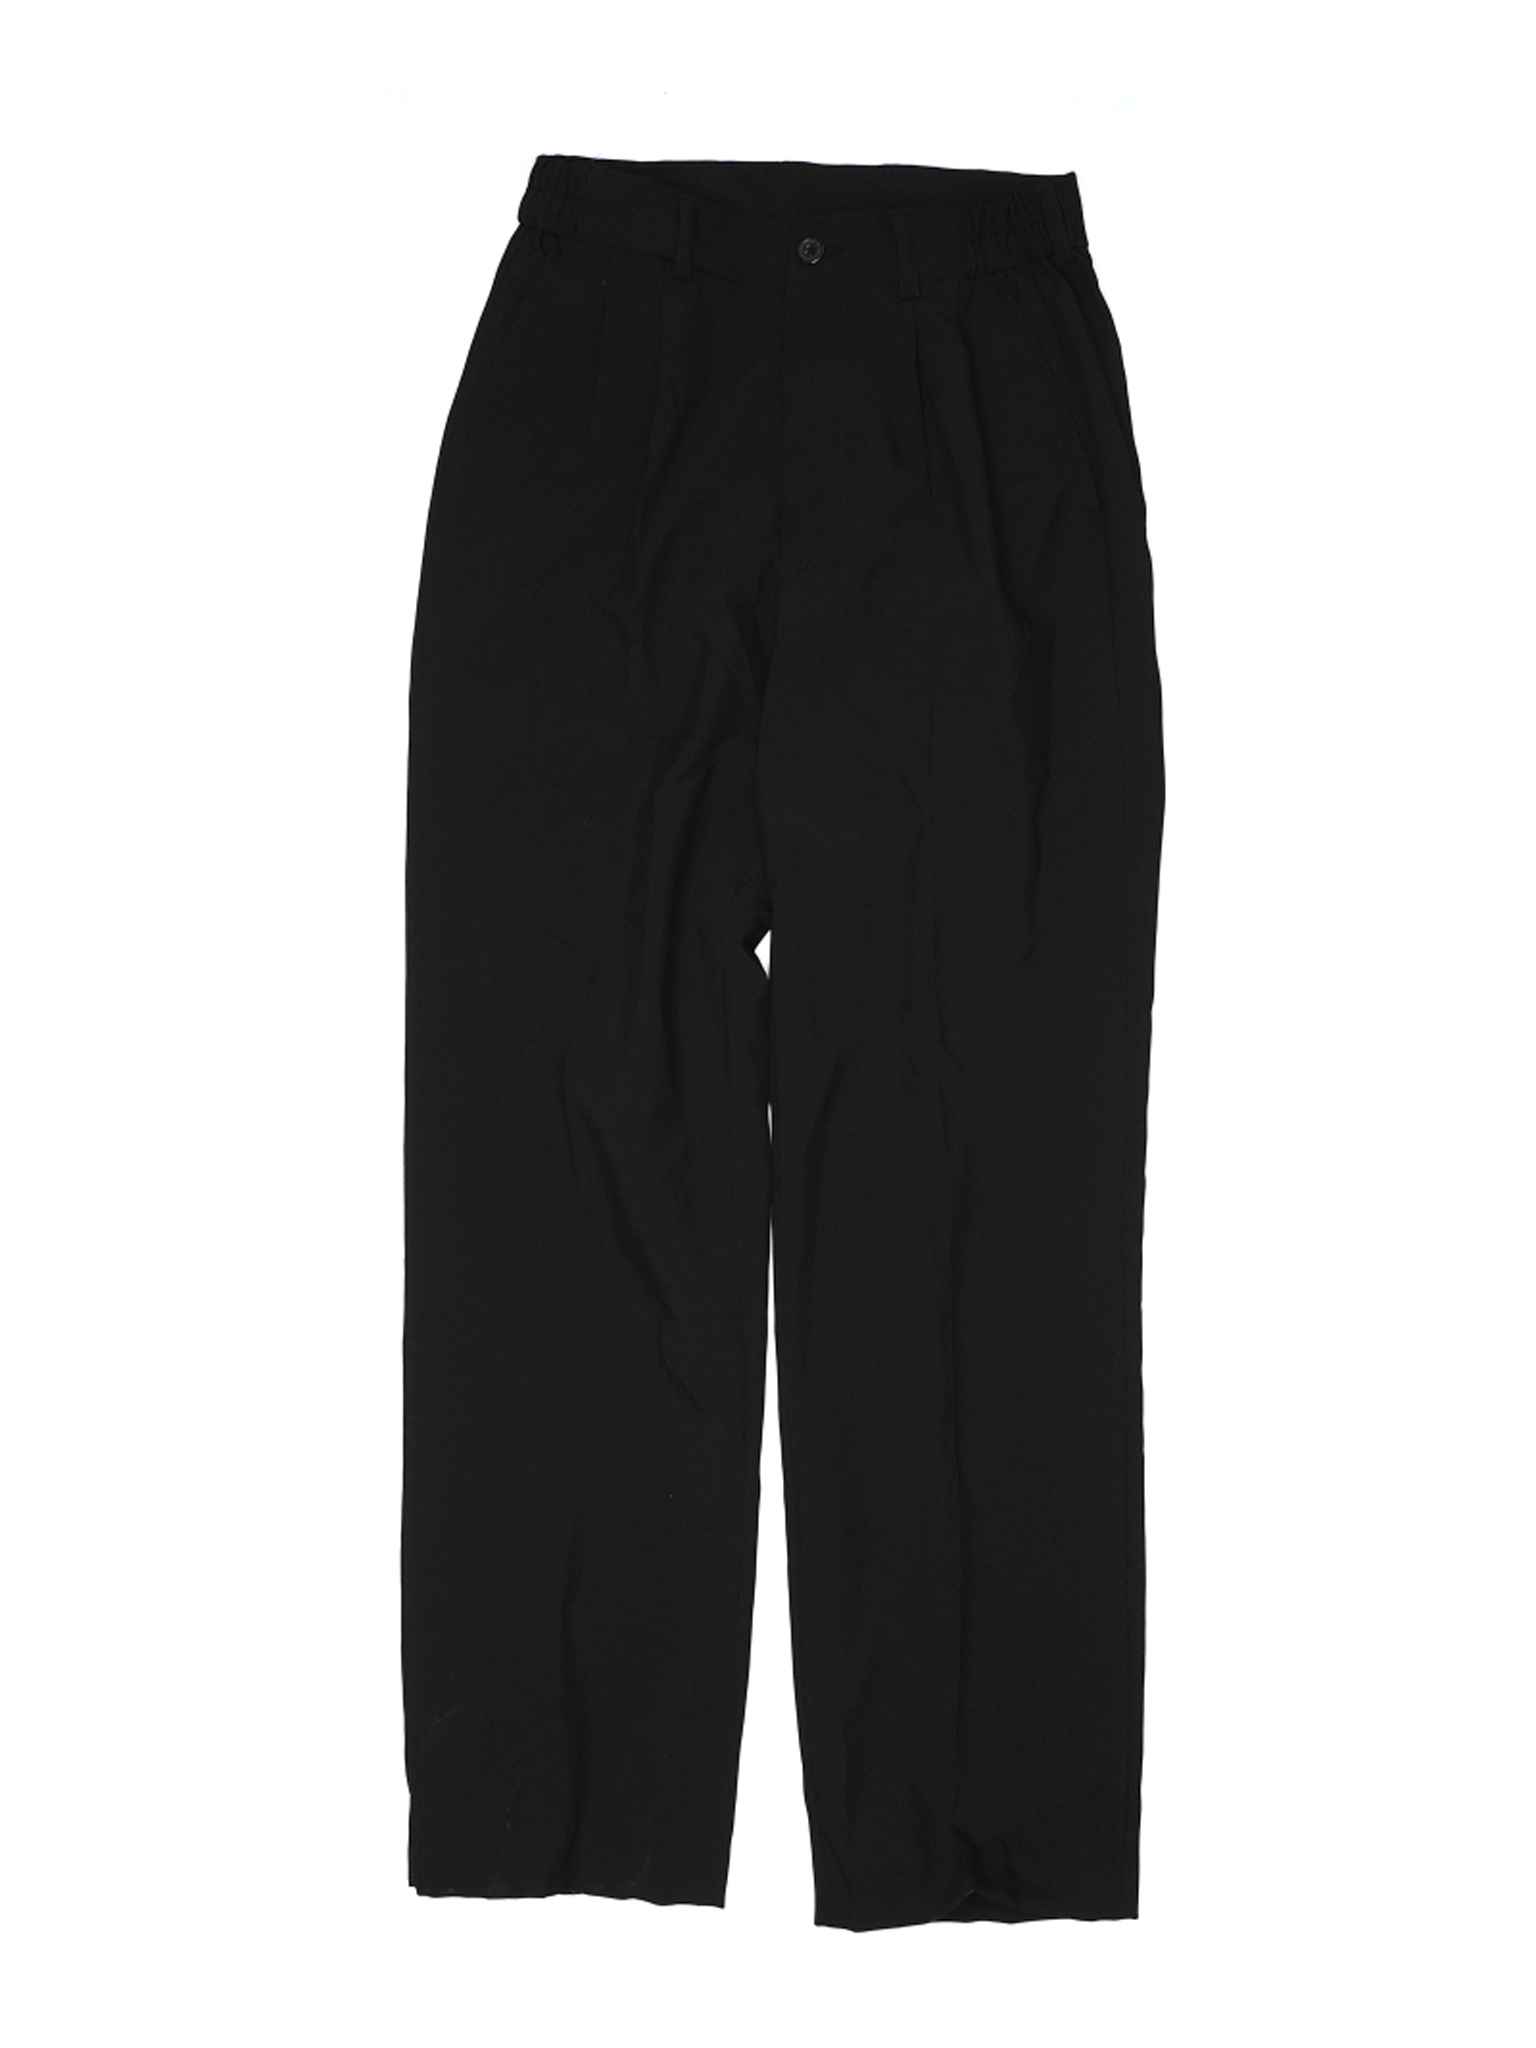 Unbranded Boys Black Dress Pants 10 | eBay